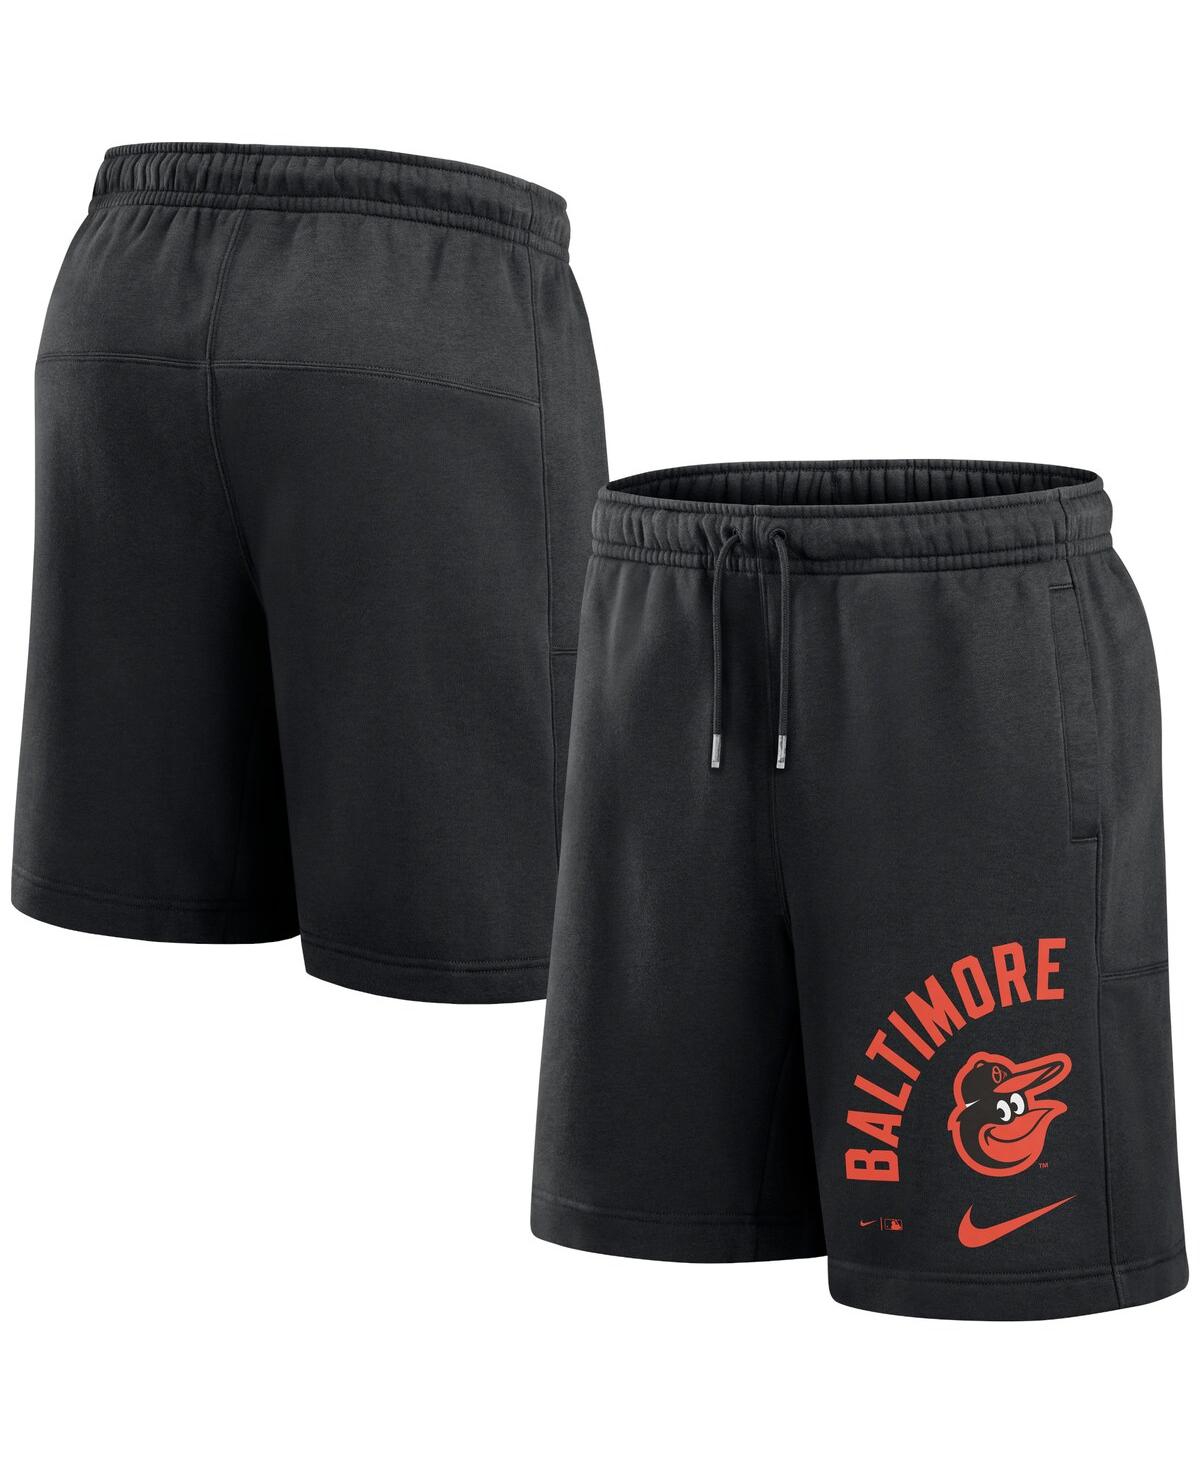 Men's Black Baltimore Orioles Arched Kicker Shorts - Blck/blk